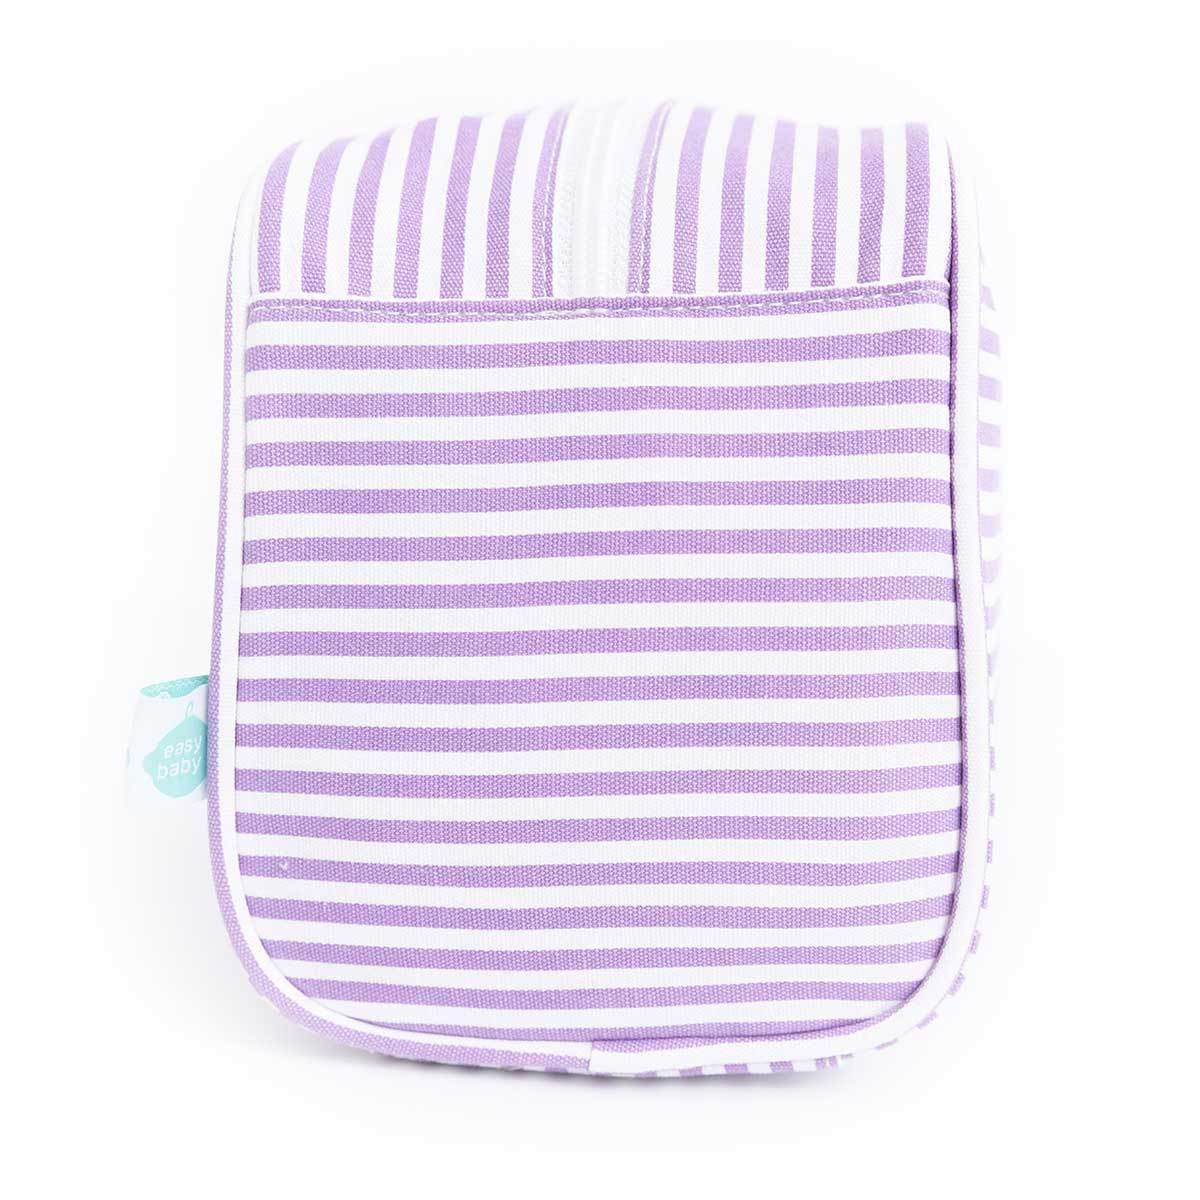 FBA Easy Baby Travelers Organizer Set of 4 Diaper Bags, Laguna Beach Polka Dot